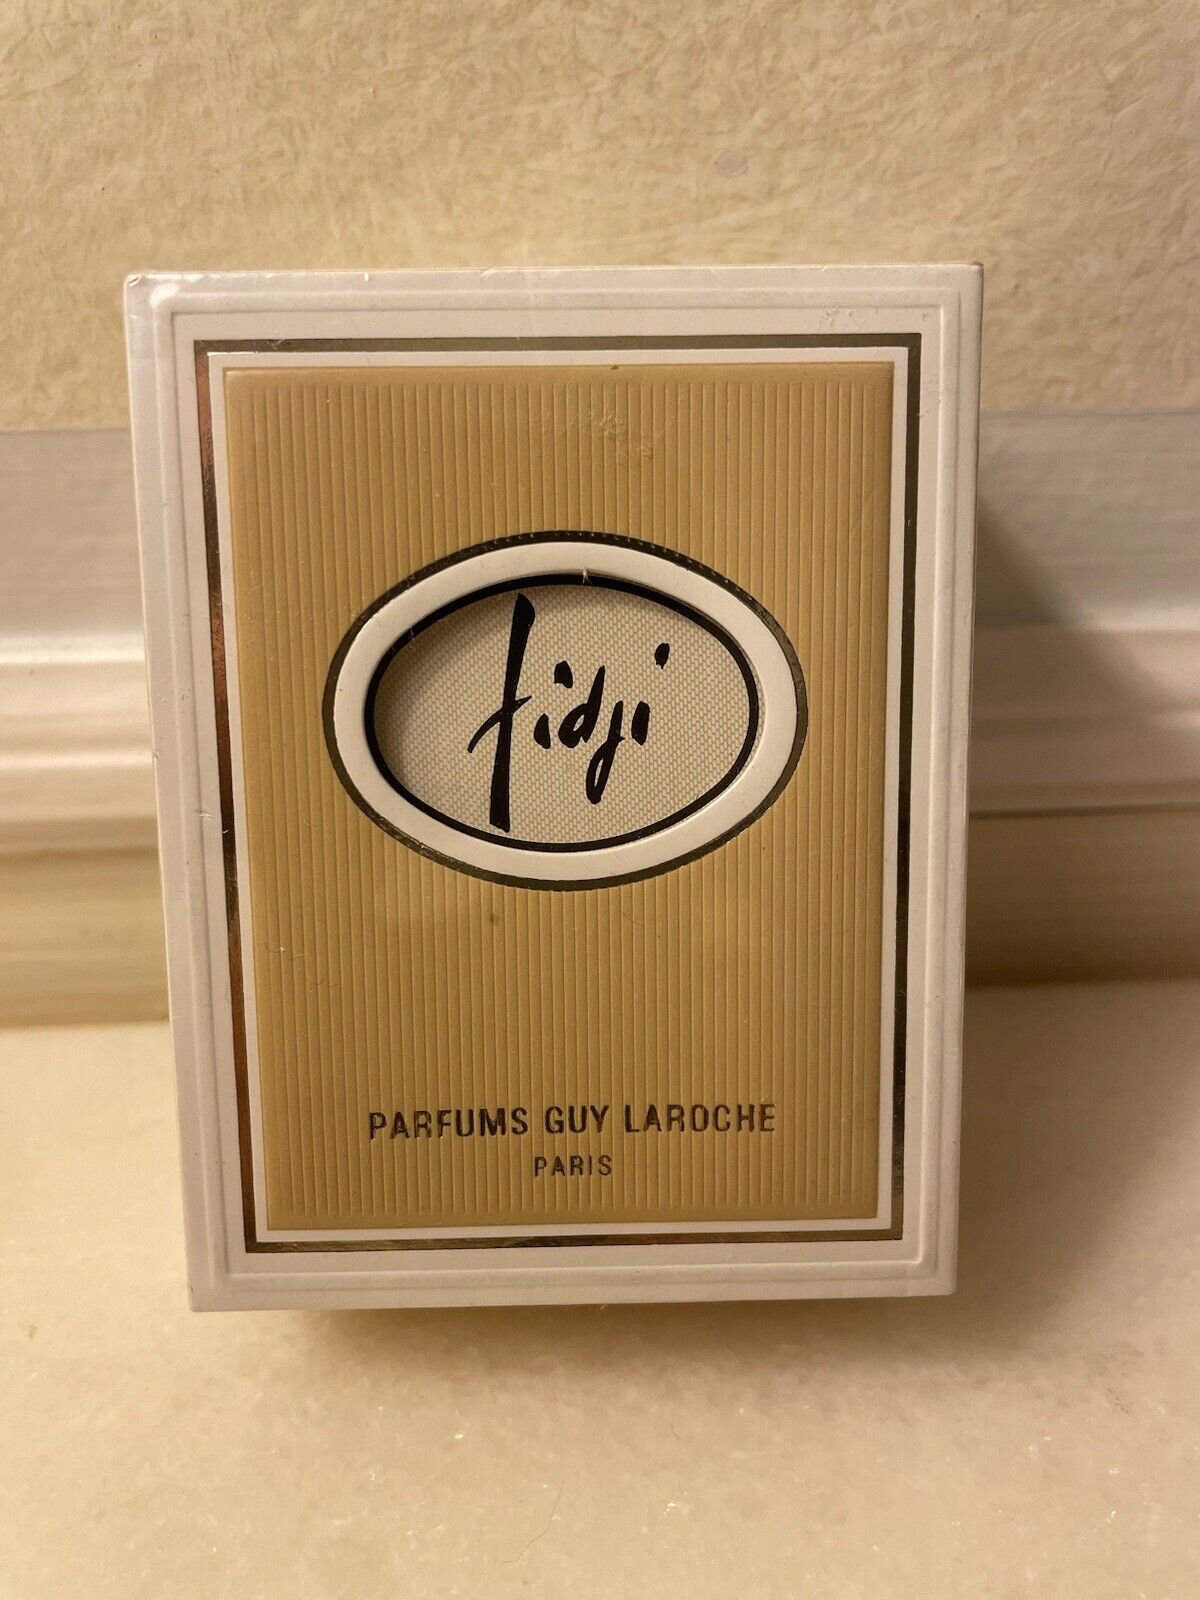 New Sealed Vintage Fidji Parfums Guy Laroche Paris 14 ml / 1/2 oz France